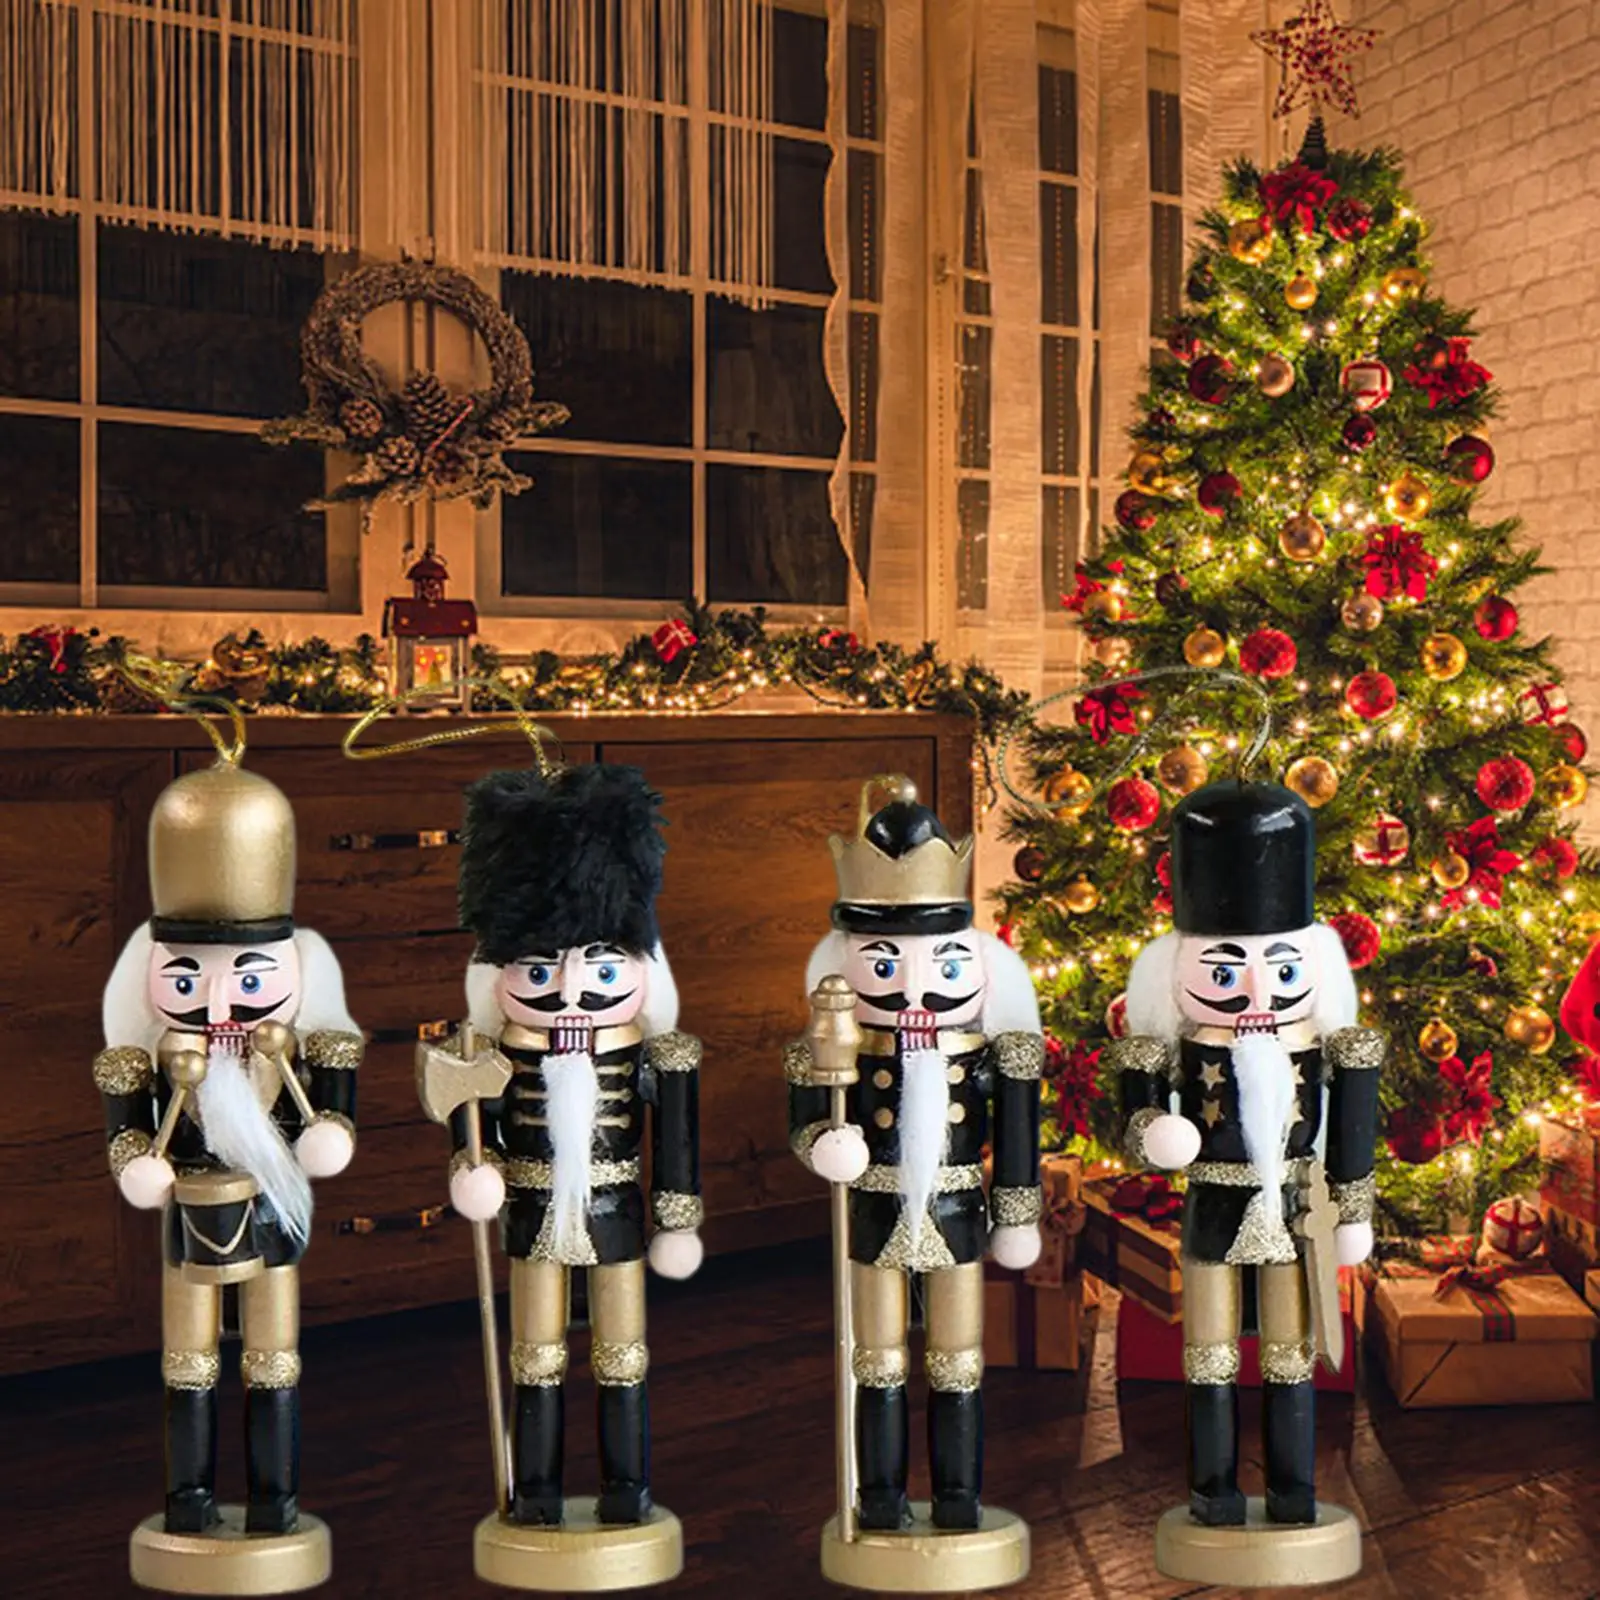 4 Pieces Christmas Nutcracker Figures Decorative Xmas Decor Figures 13cm Doll Ornament for Holiday Christmas Indoor Indoor Decor